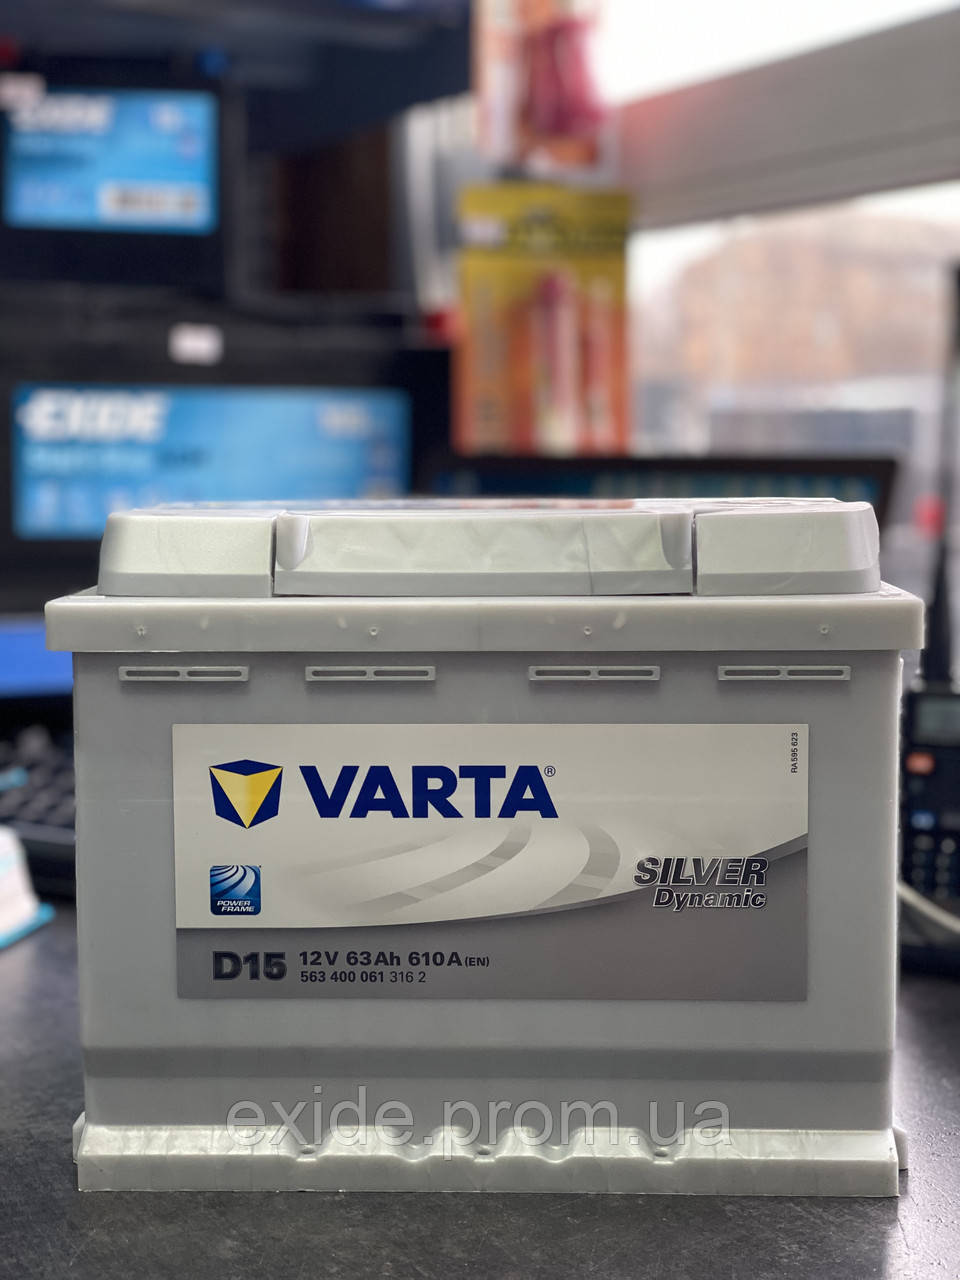 Varta D15 Silver Dynamic 12V 63Ah Batterie 563400061